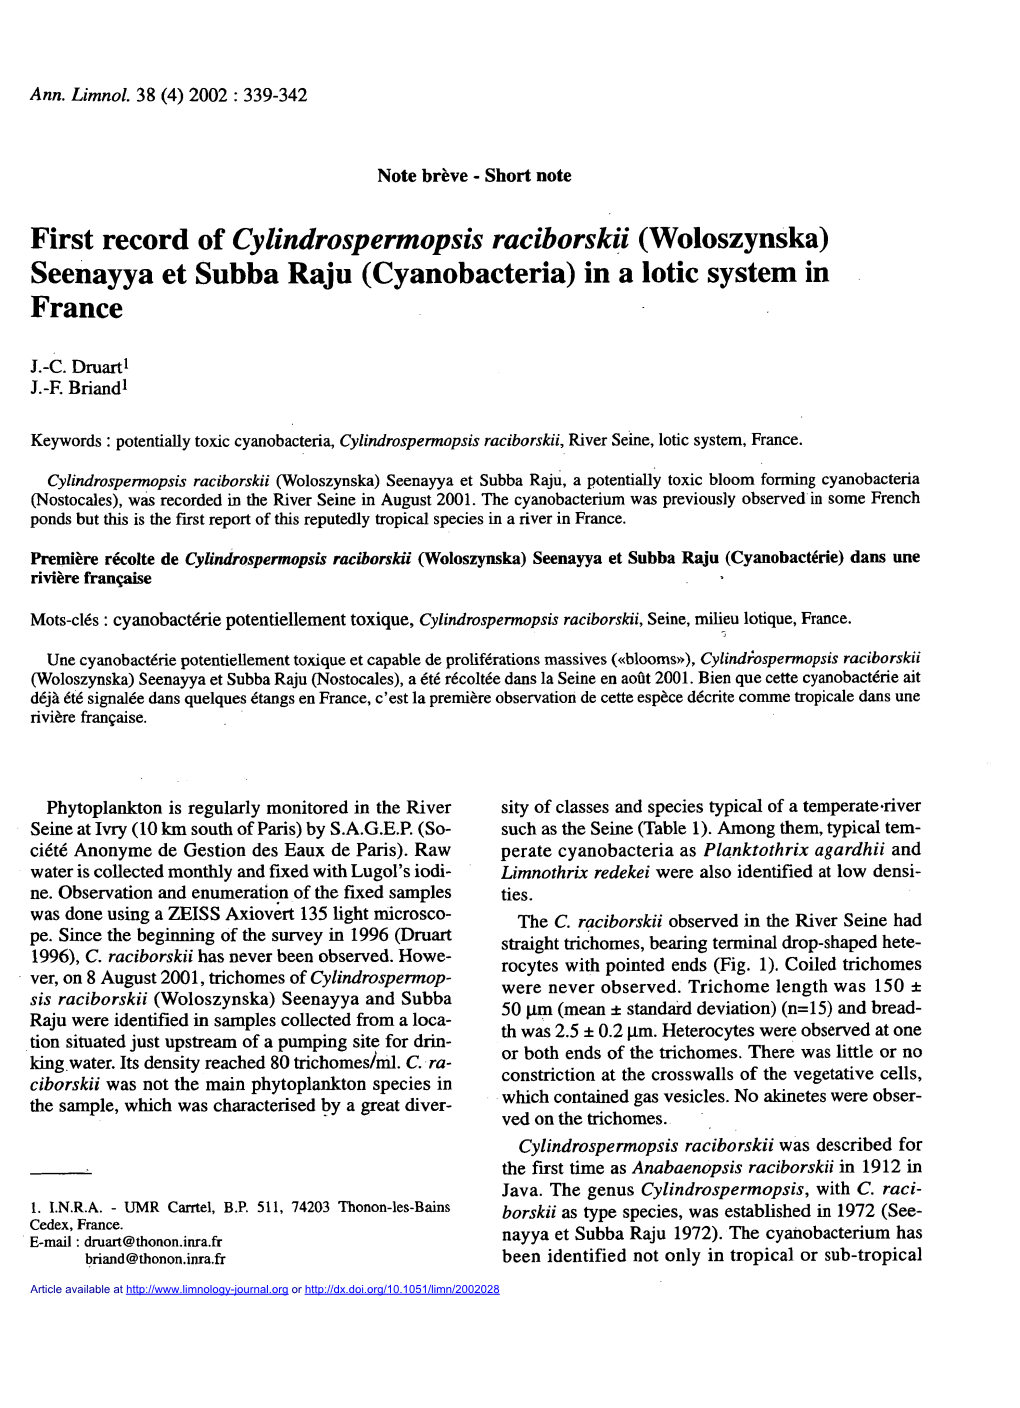 First Record of Cylindrospermopsis Raciborskii \(Woloszynska